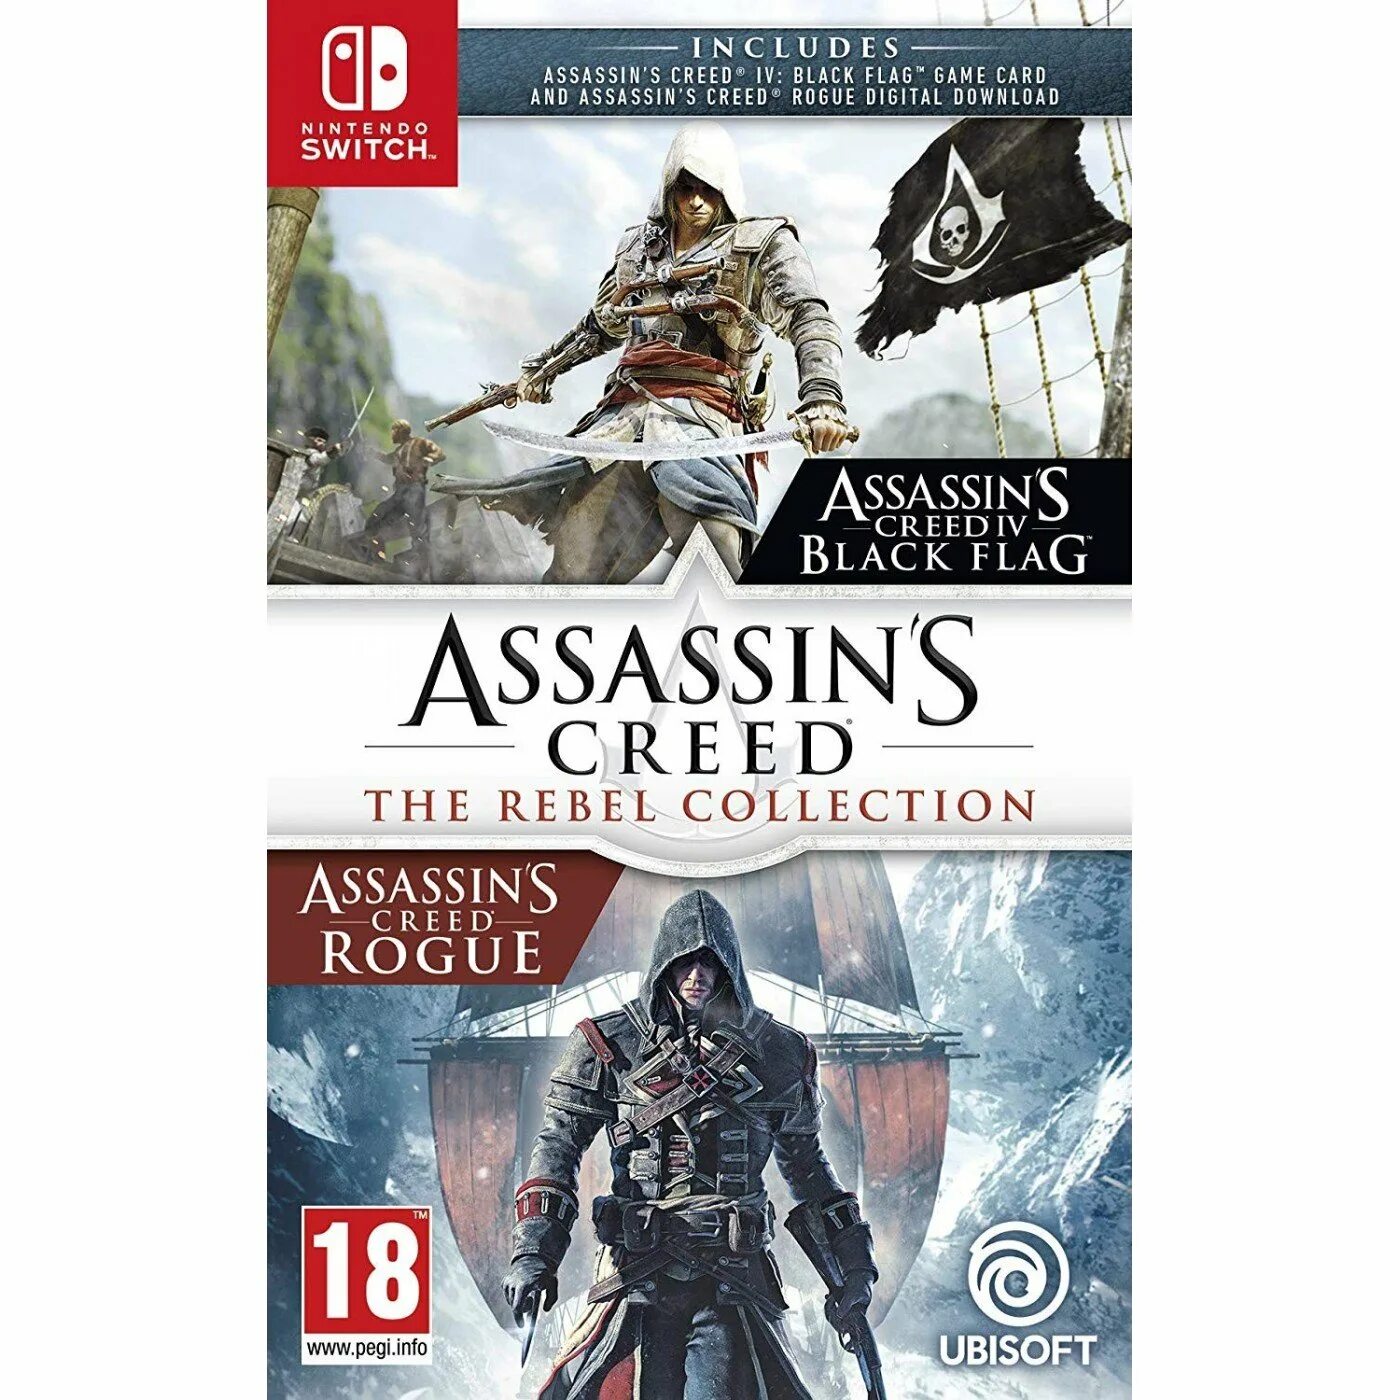 Assassins Creed мятежники коллекция Nintendo. Assassin's Creed Nintendo Switch. Ассасин Крид мятежники Нинтендо свитч. Assassins Creed 3 обновленная версия свич.